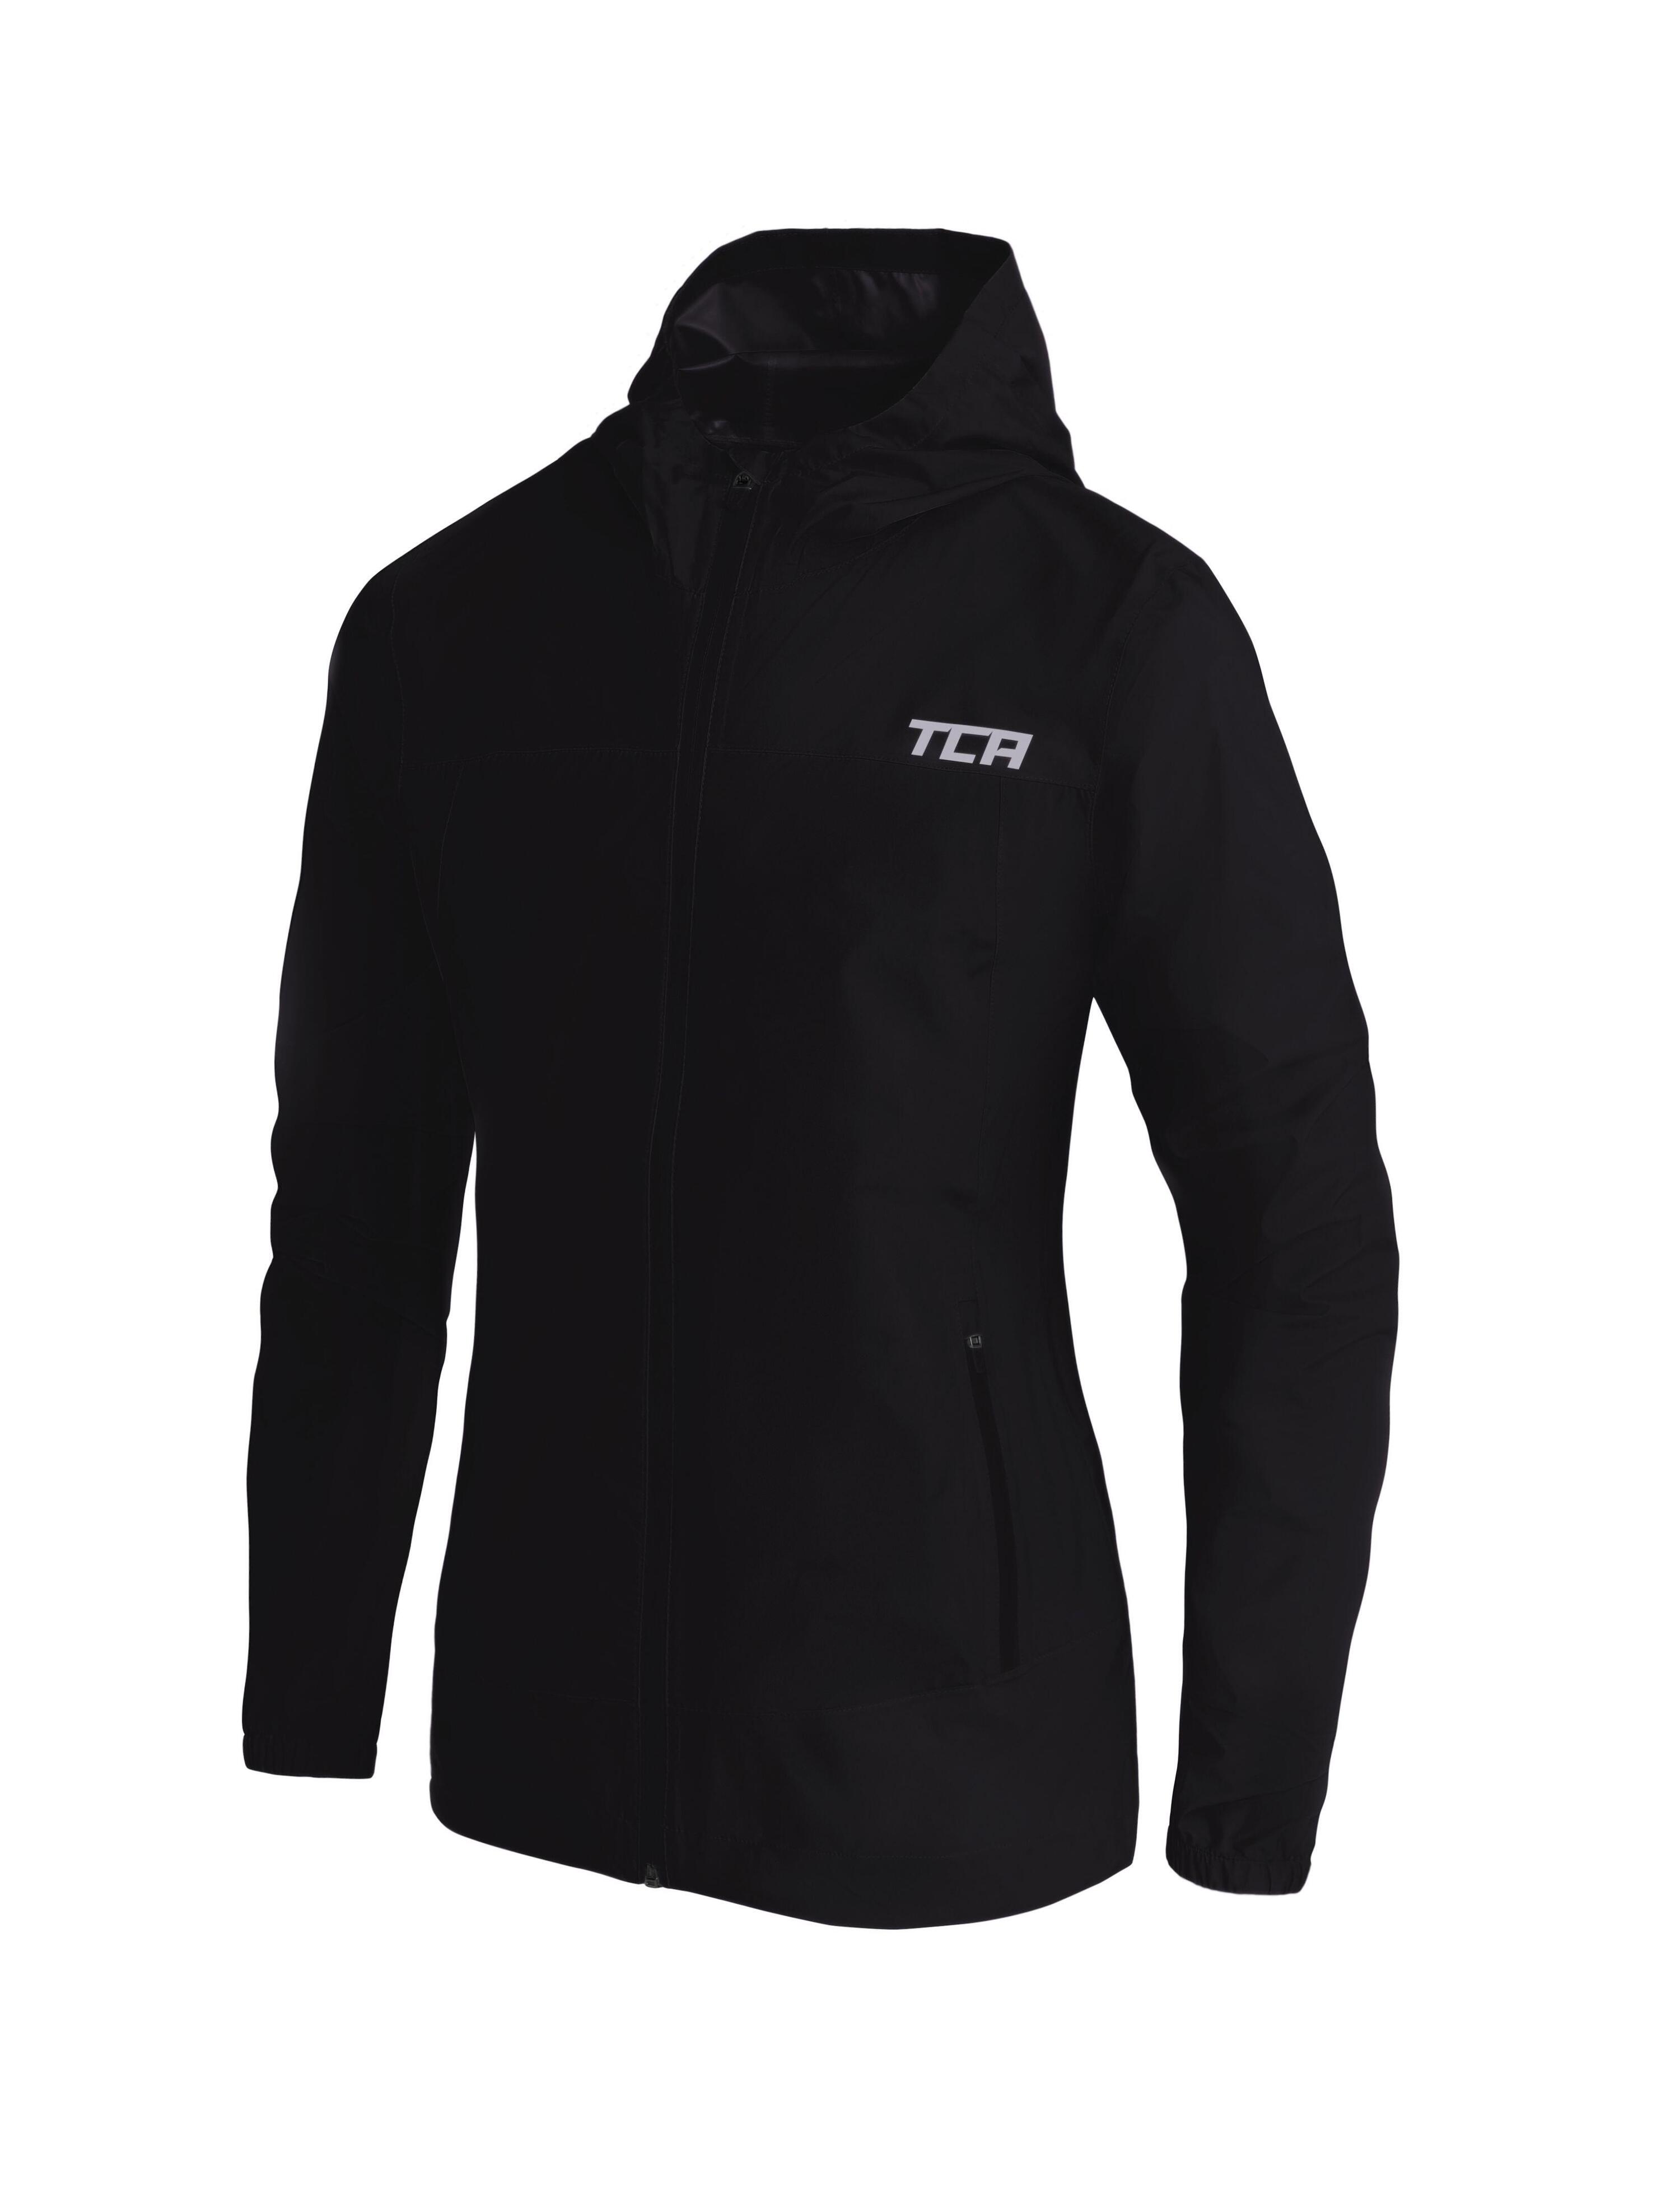 TCA Men's AirLite Rain Jacket with Zip Pockets - Black